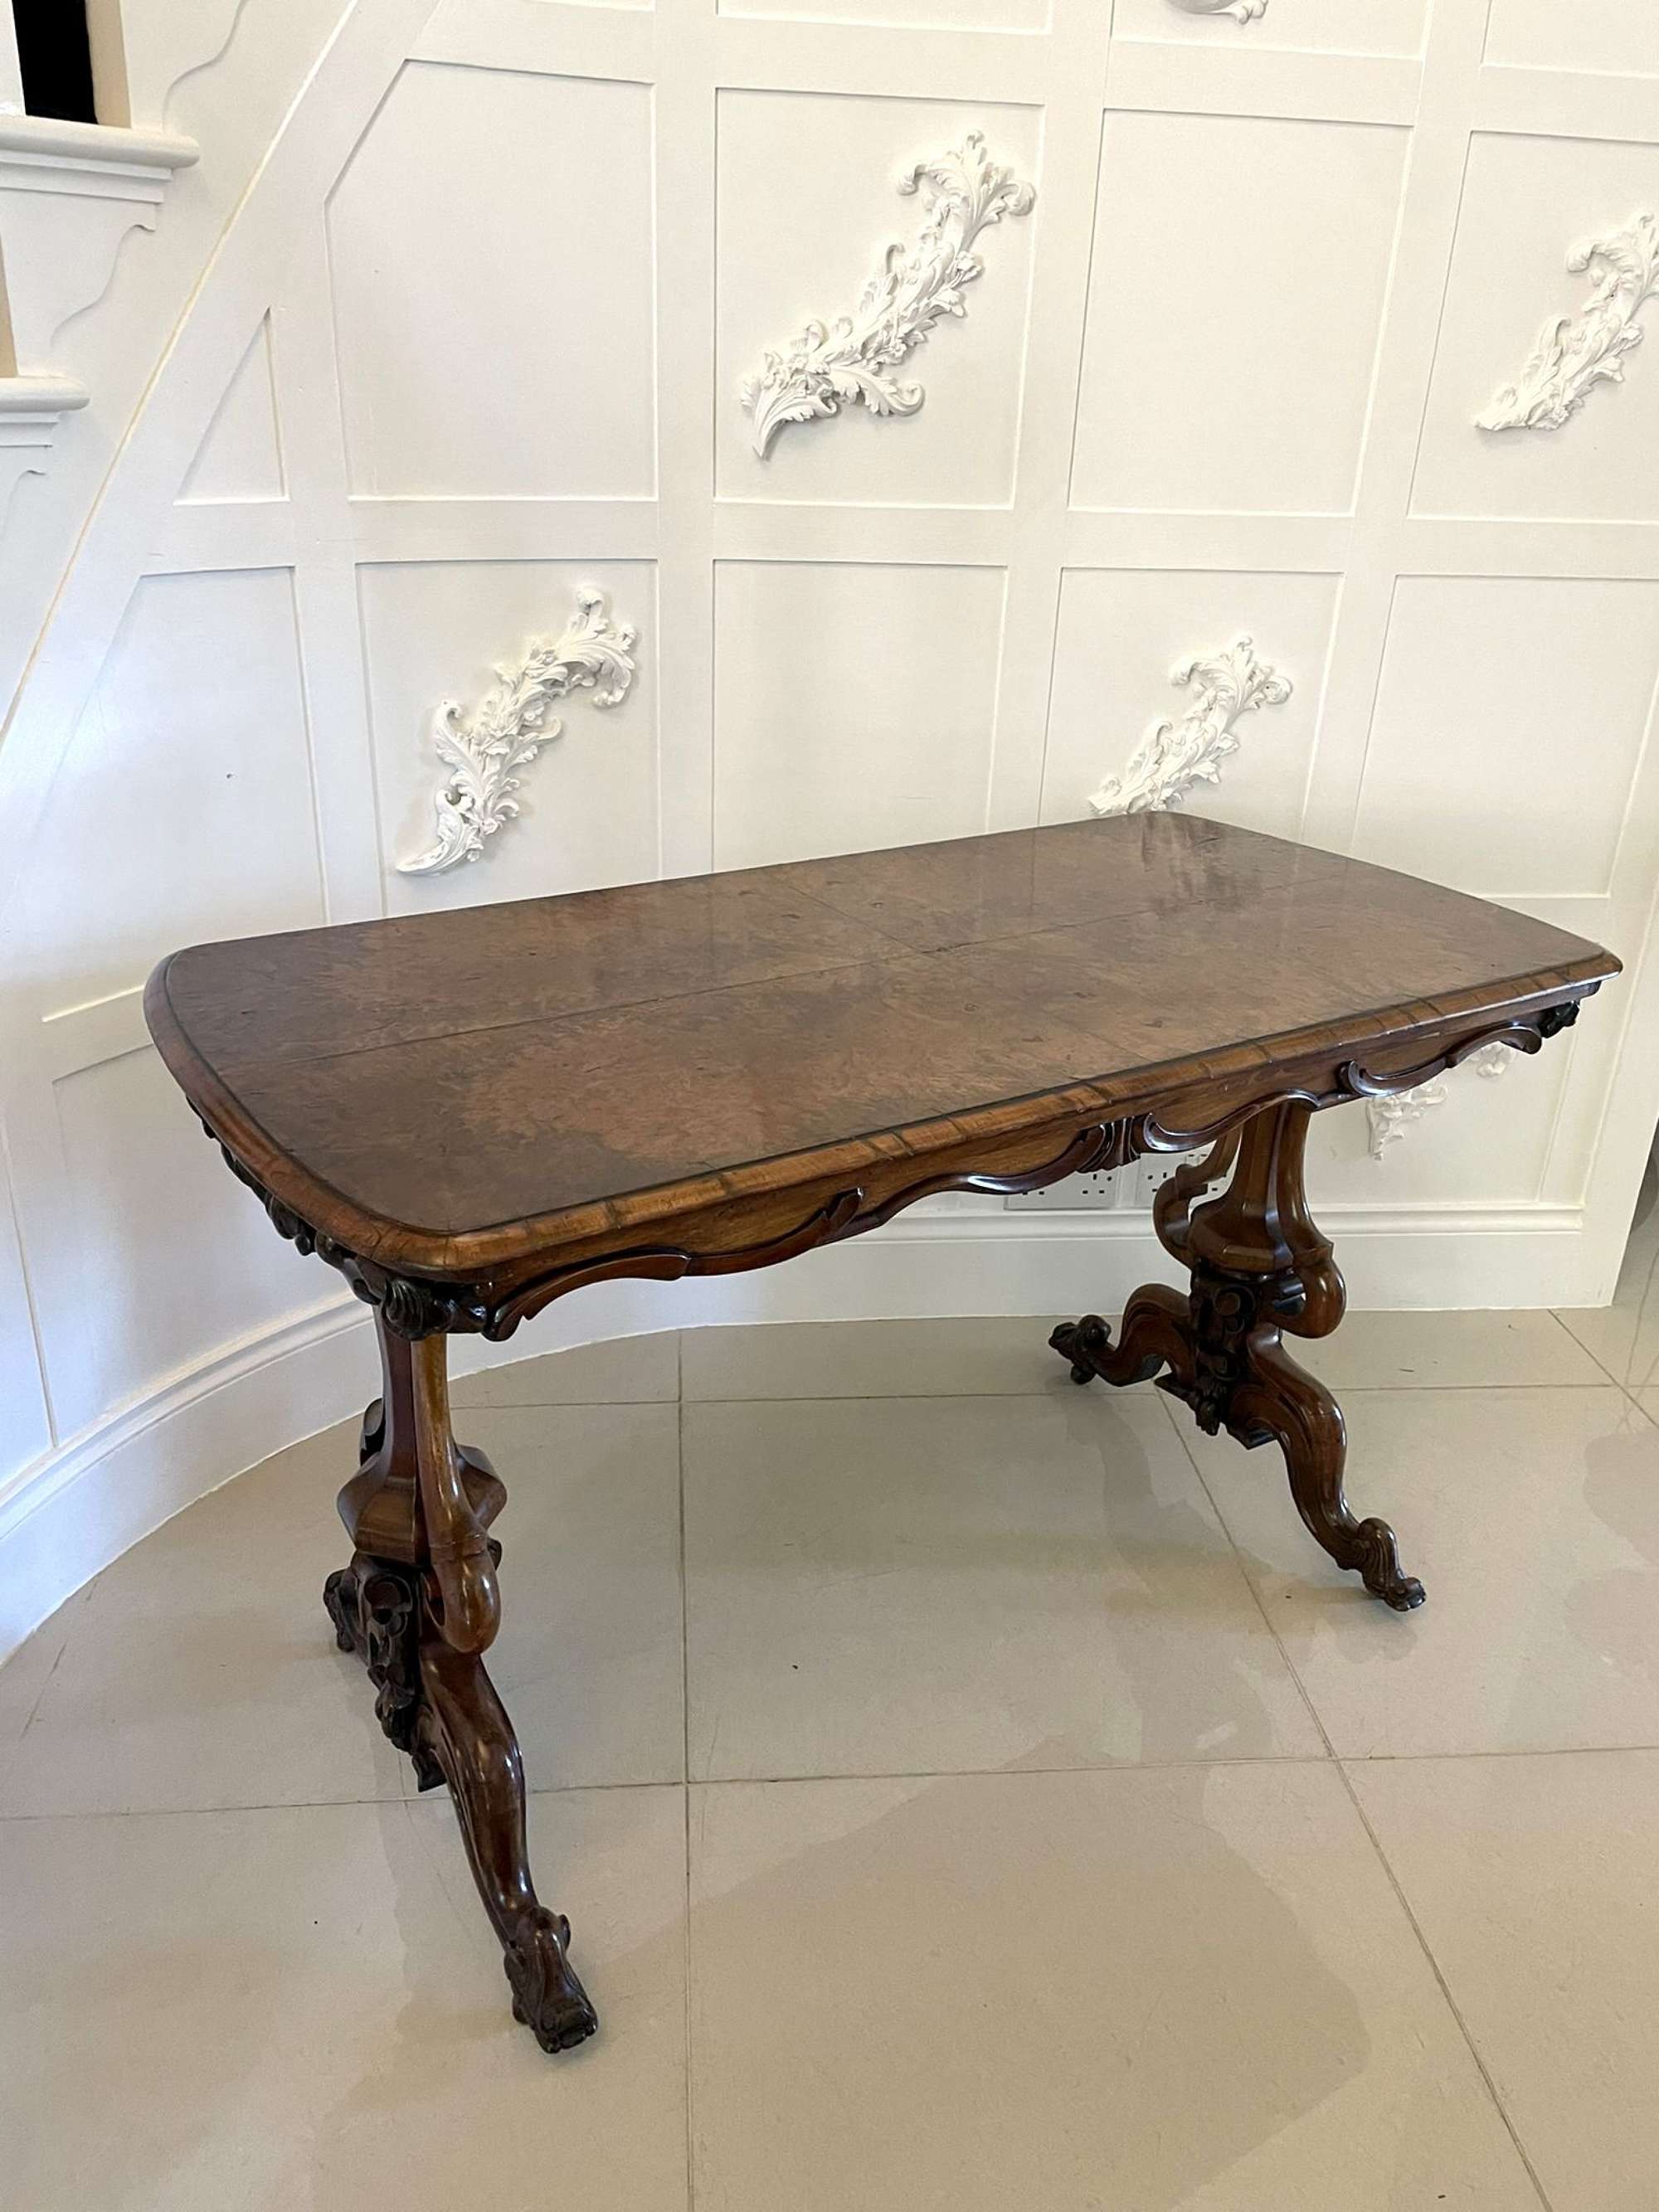 Antique Victorian Quality Burr Walnut Freestanding Centre Table